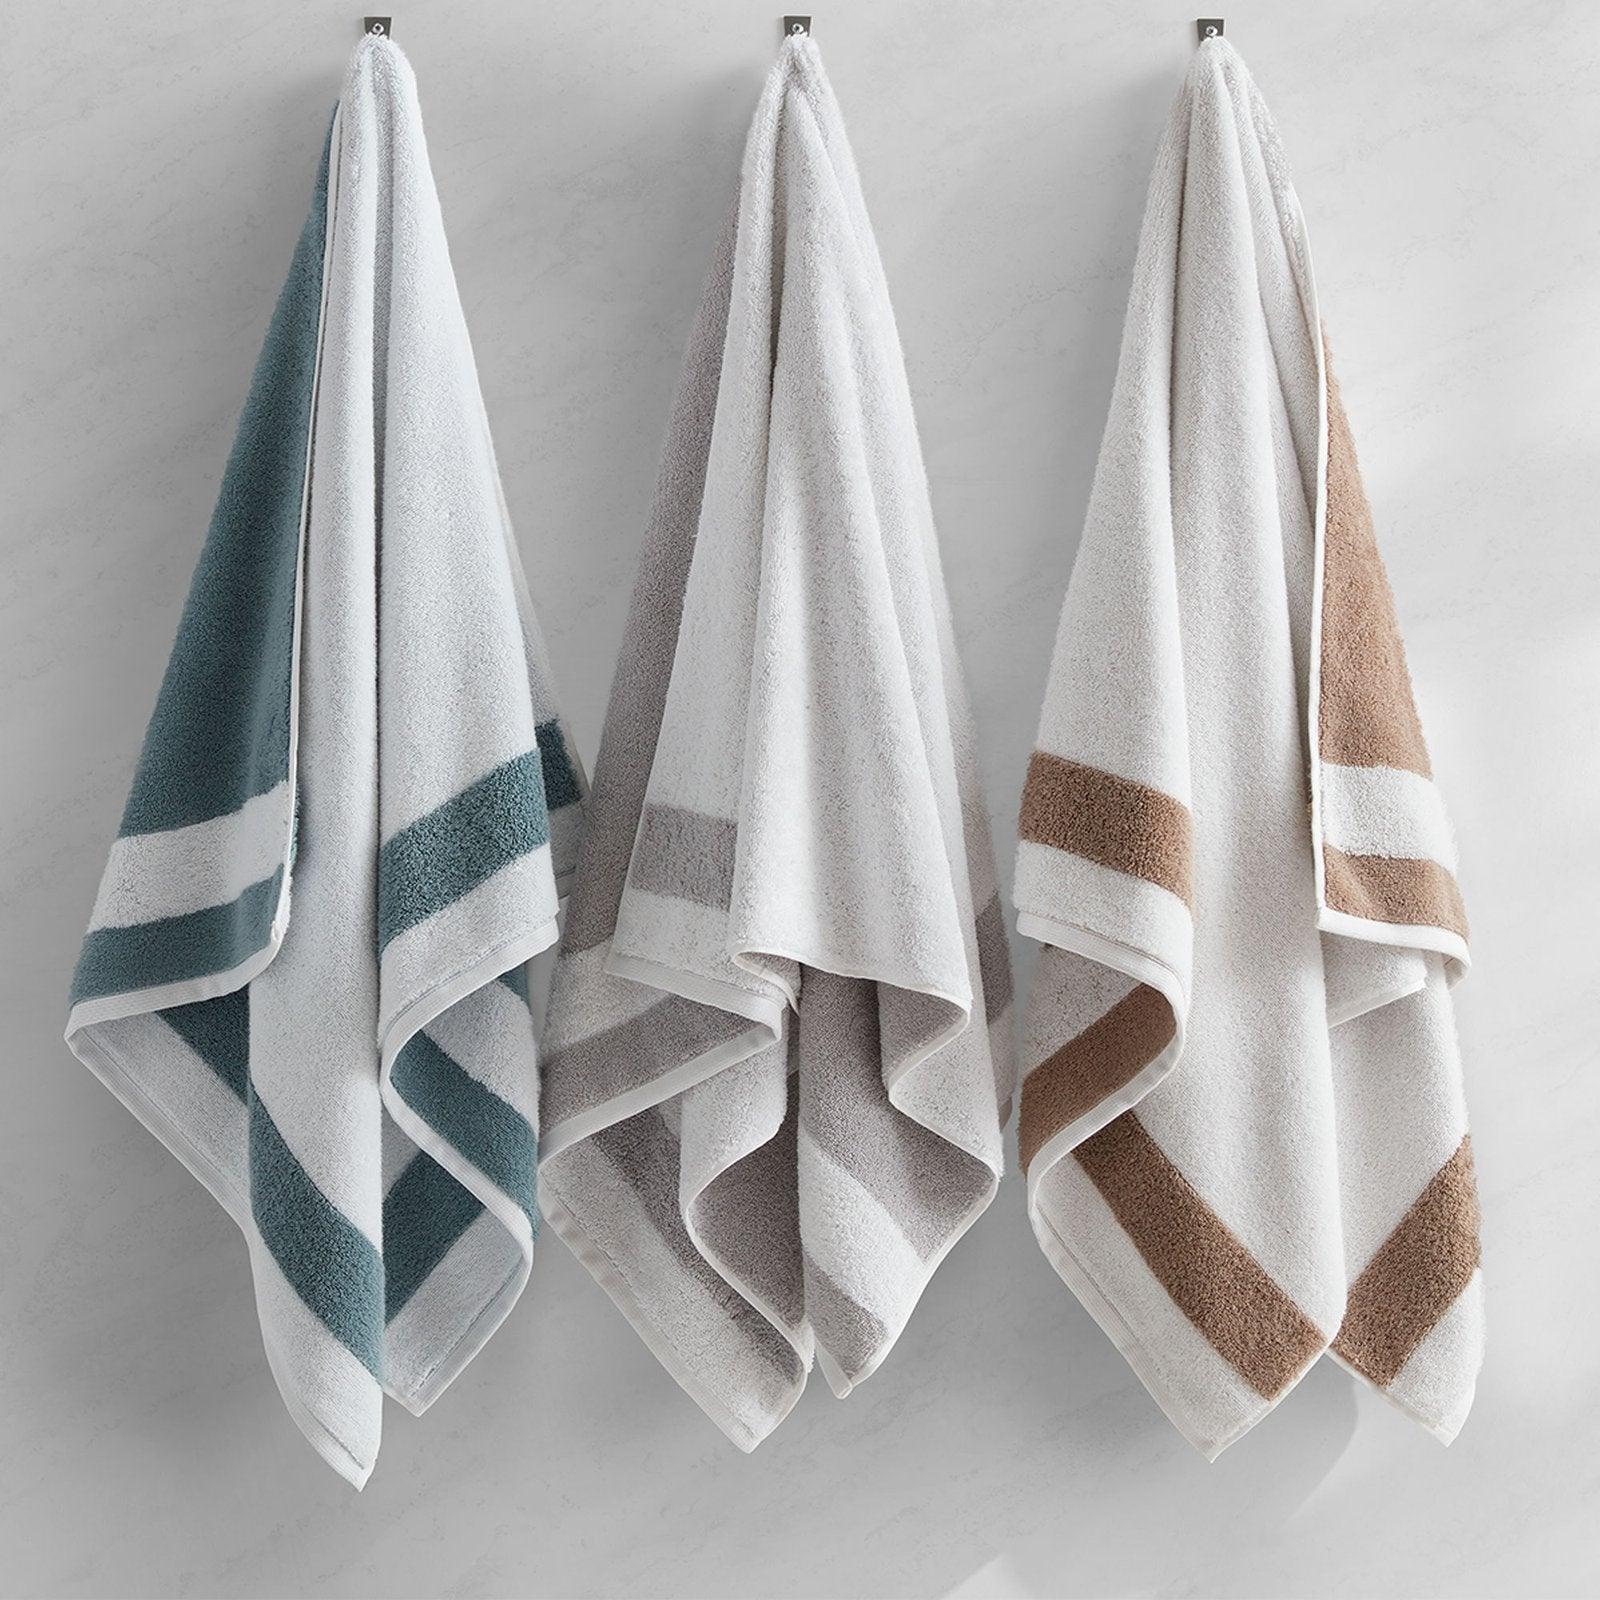 Sedona Reversible Towels - Elegant Linen